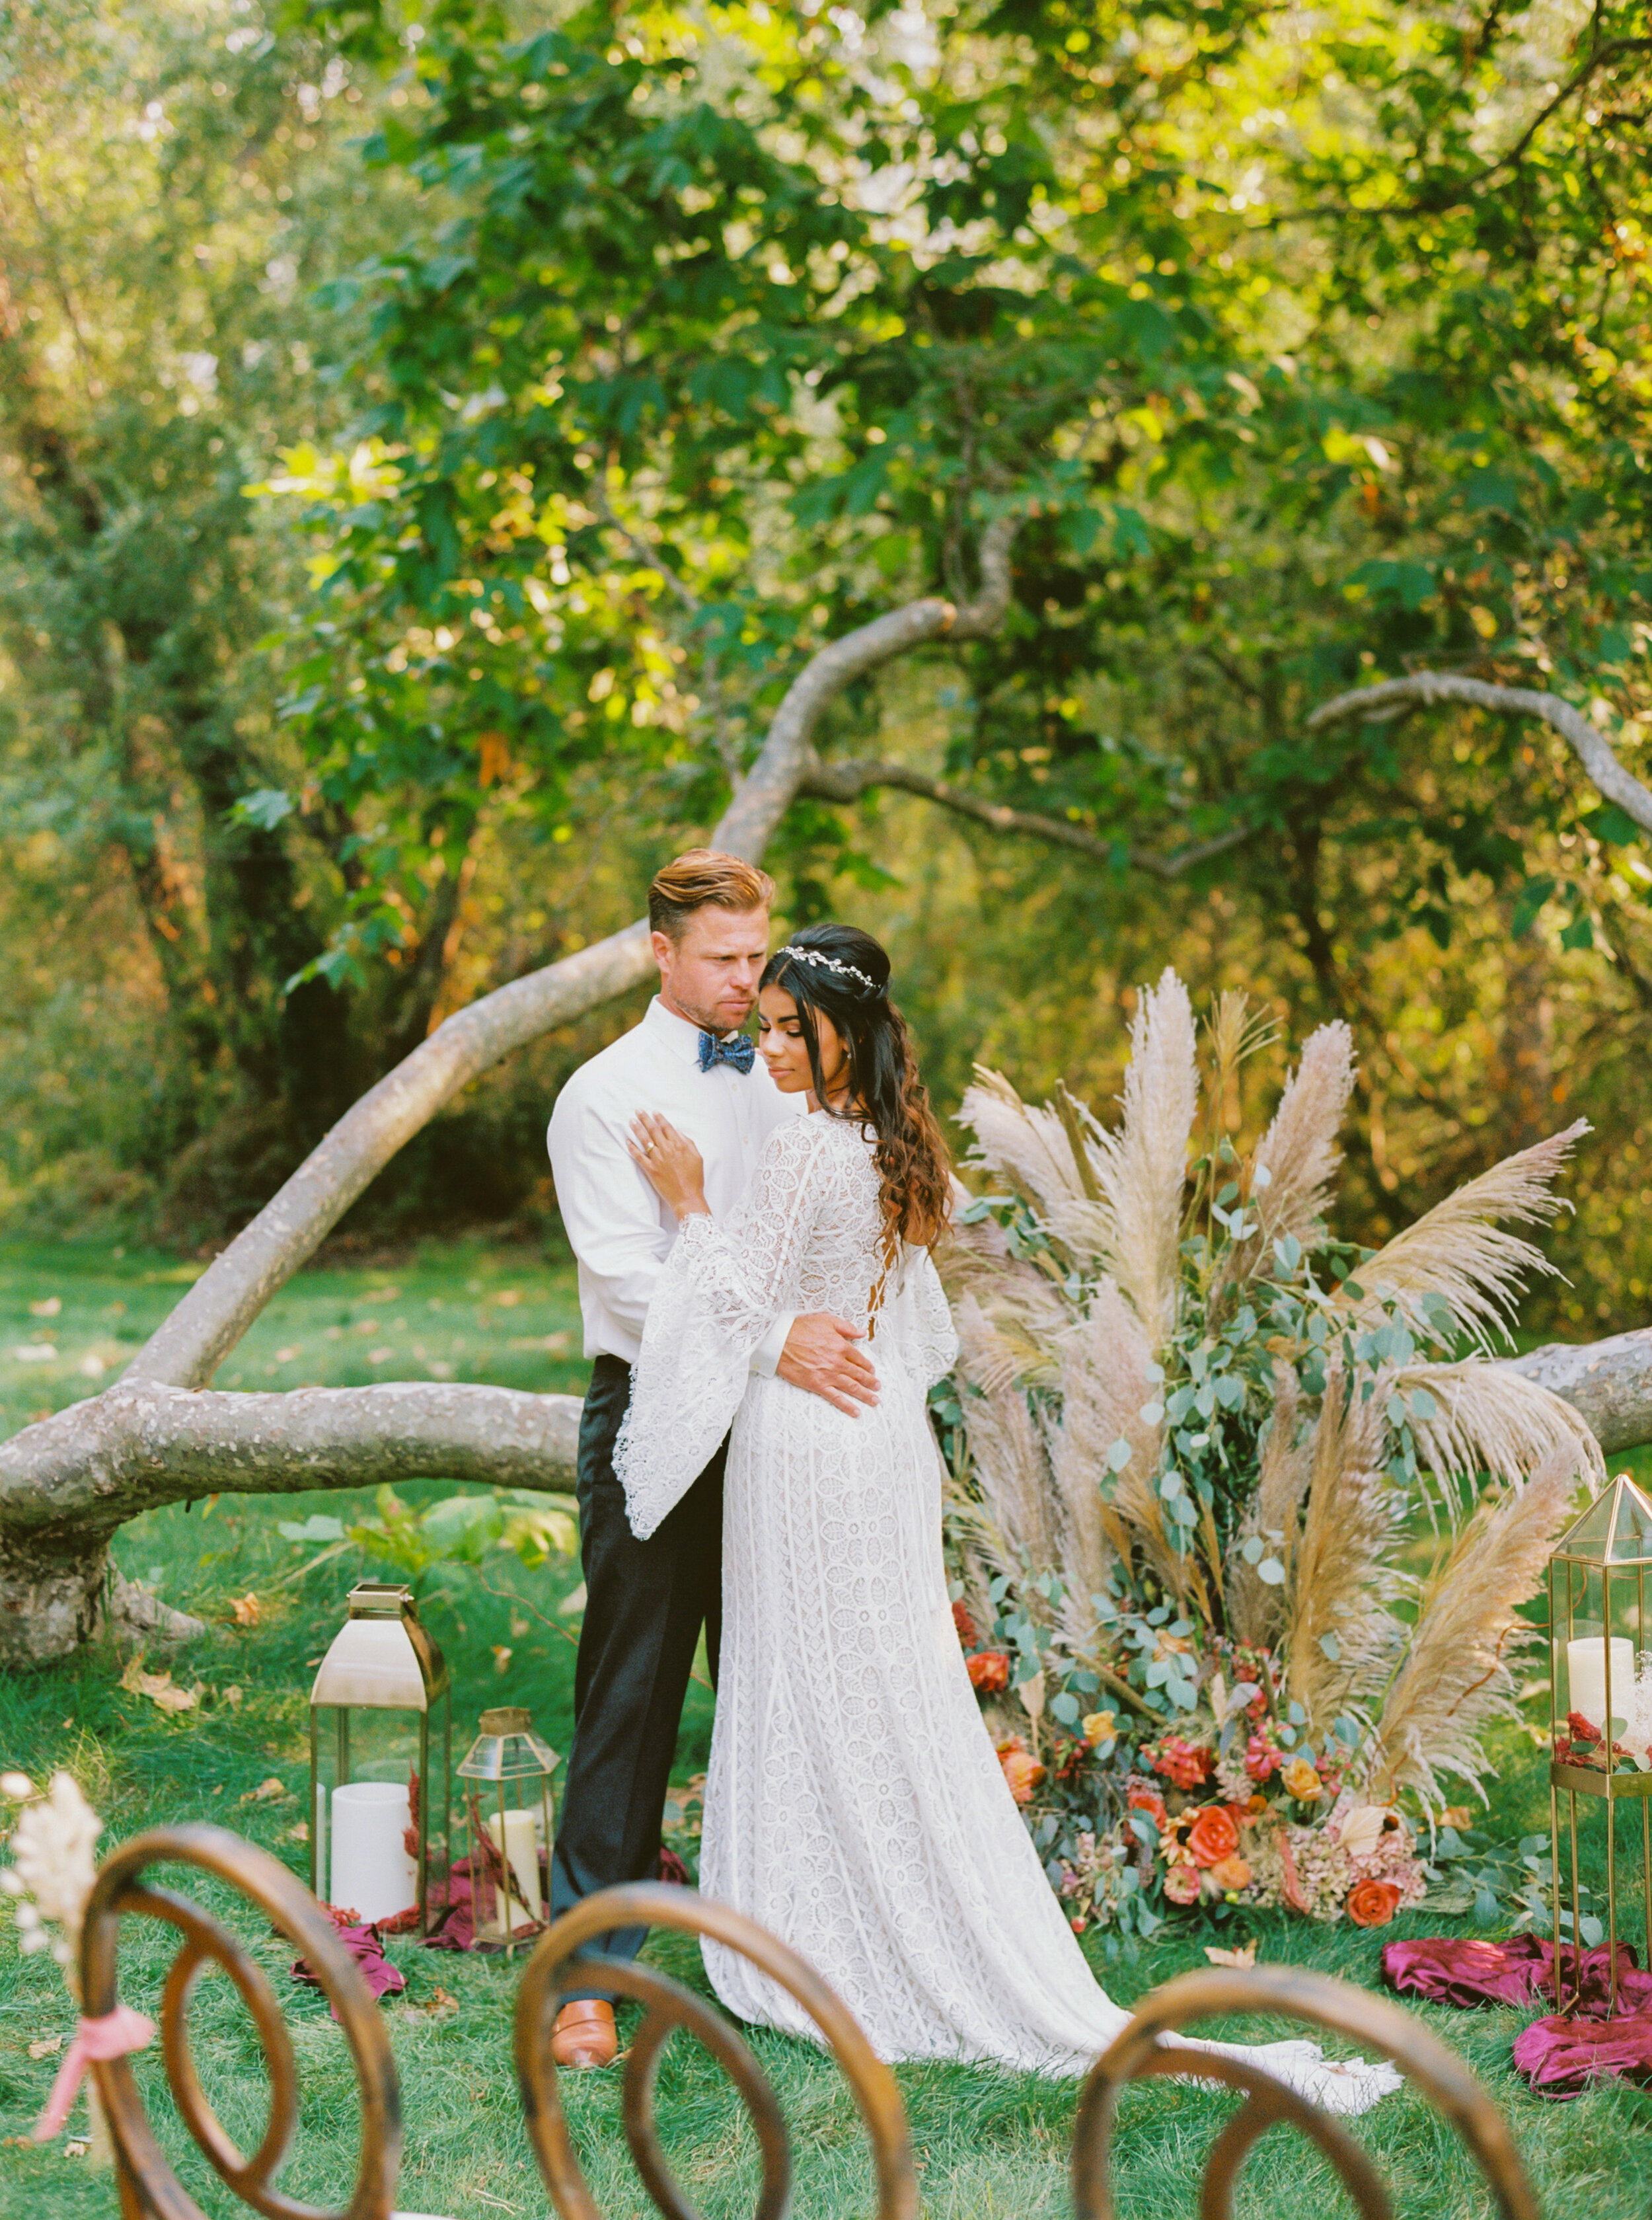 Sarahi Hadden - An Earthy Summer Boho Inspired Wedding with Sunset Hues at Gardener Ranch-131.jpg